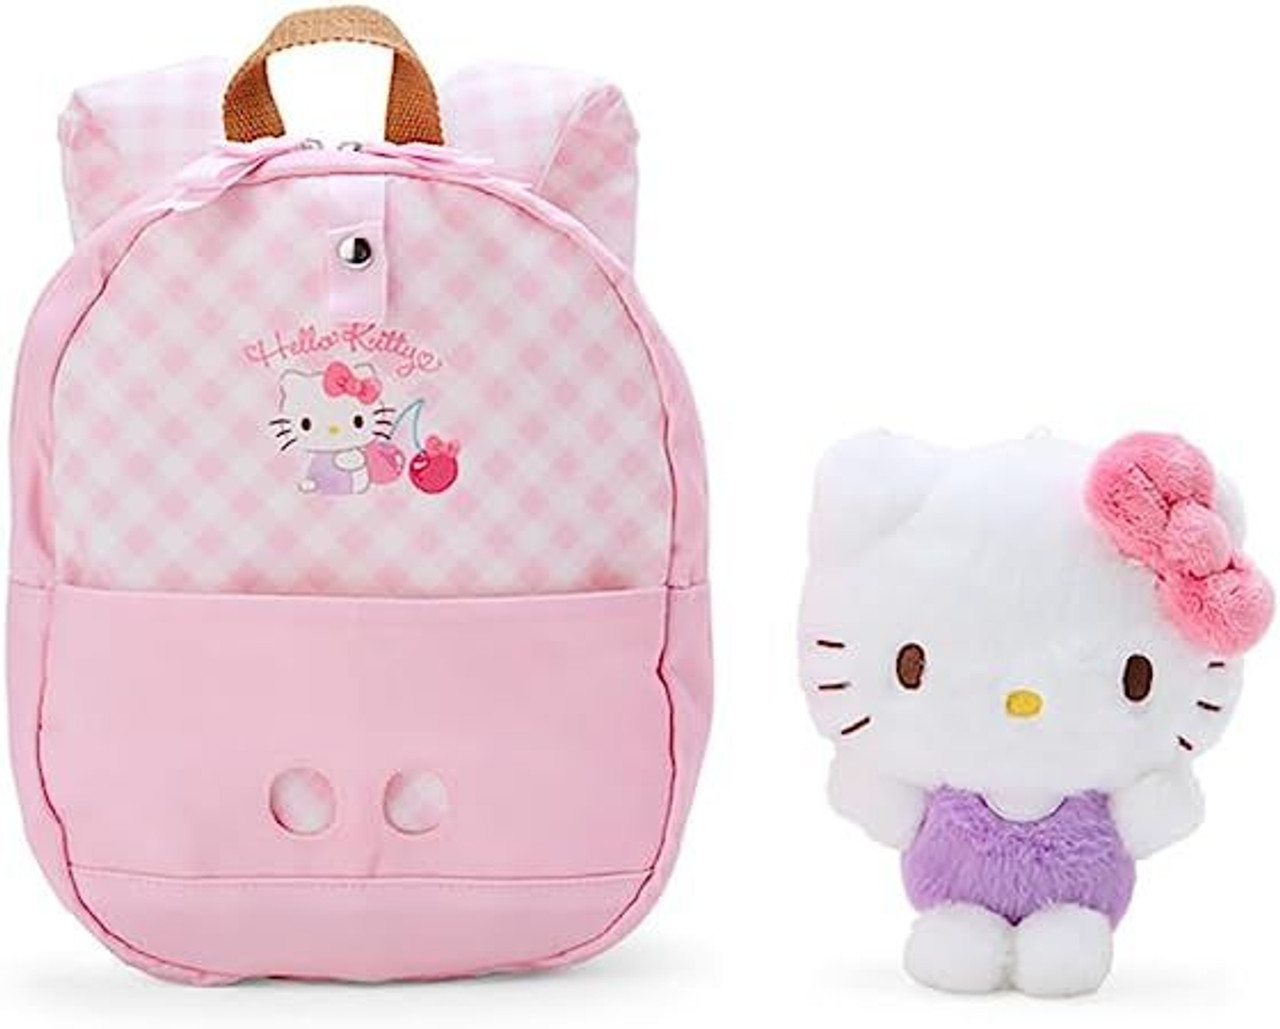 Hello Kitty Backpack -  Canada